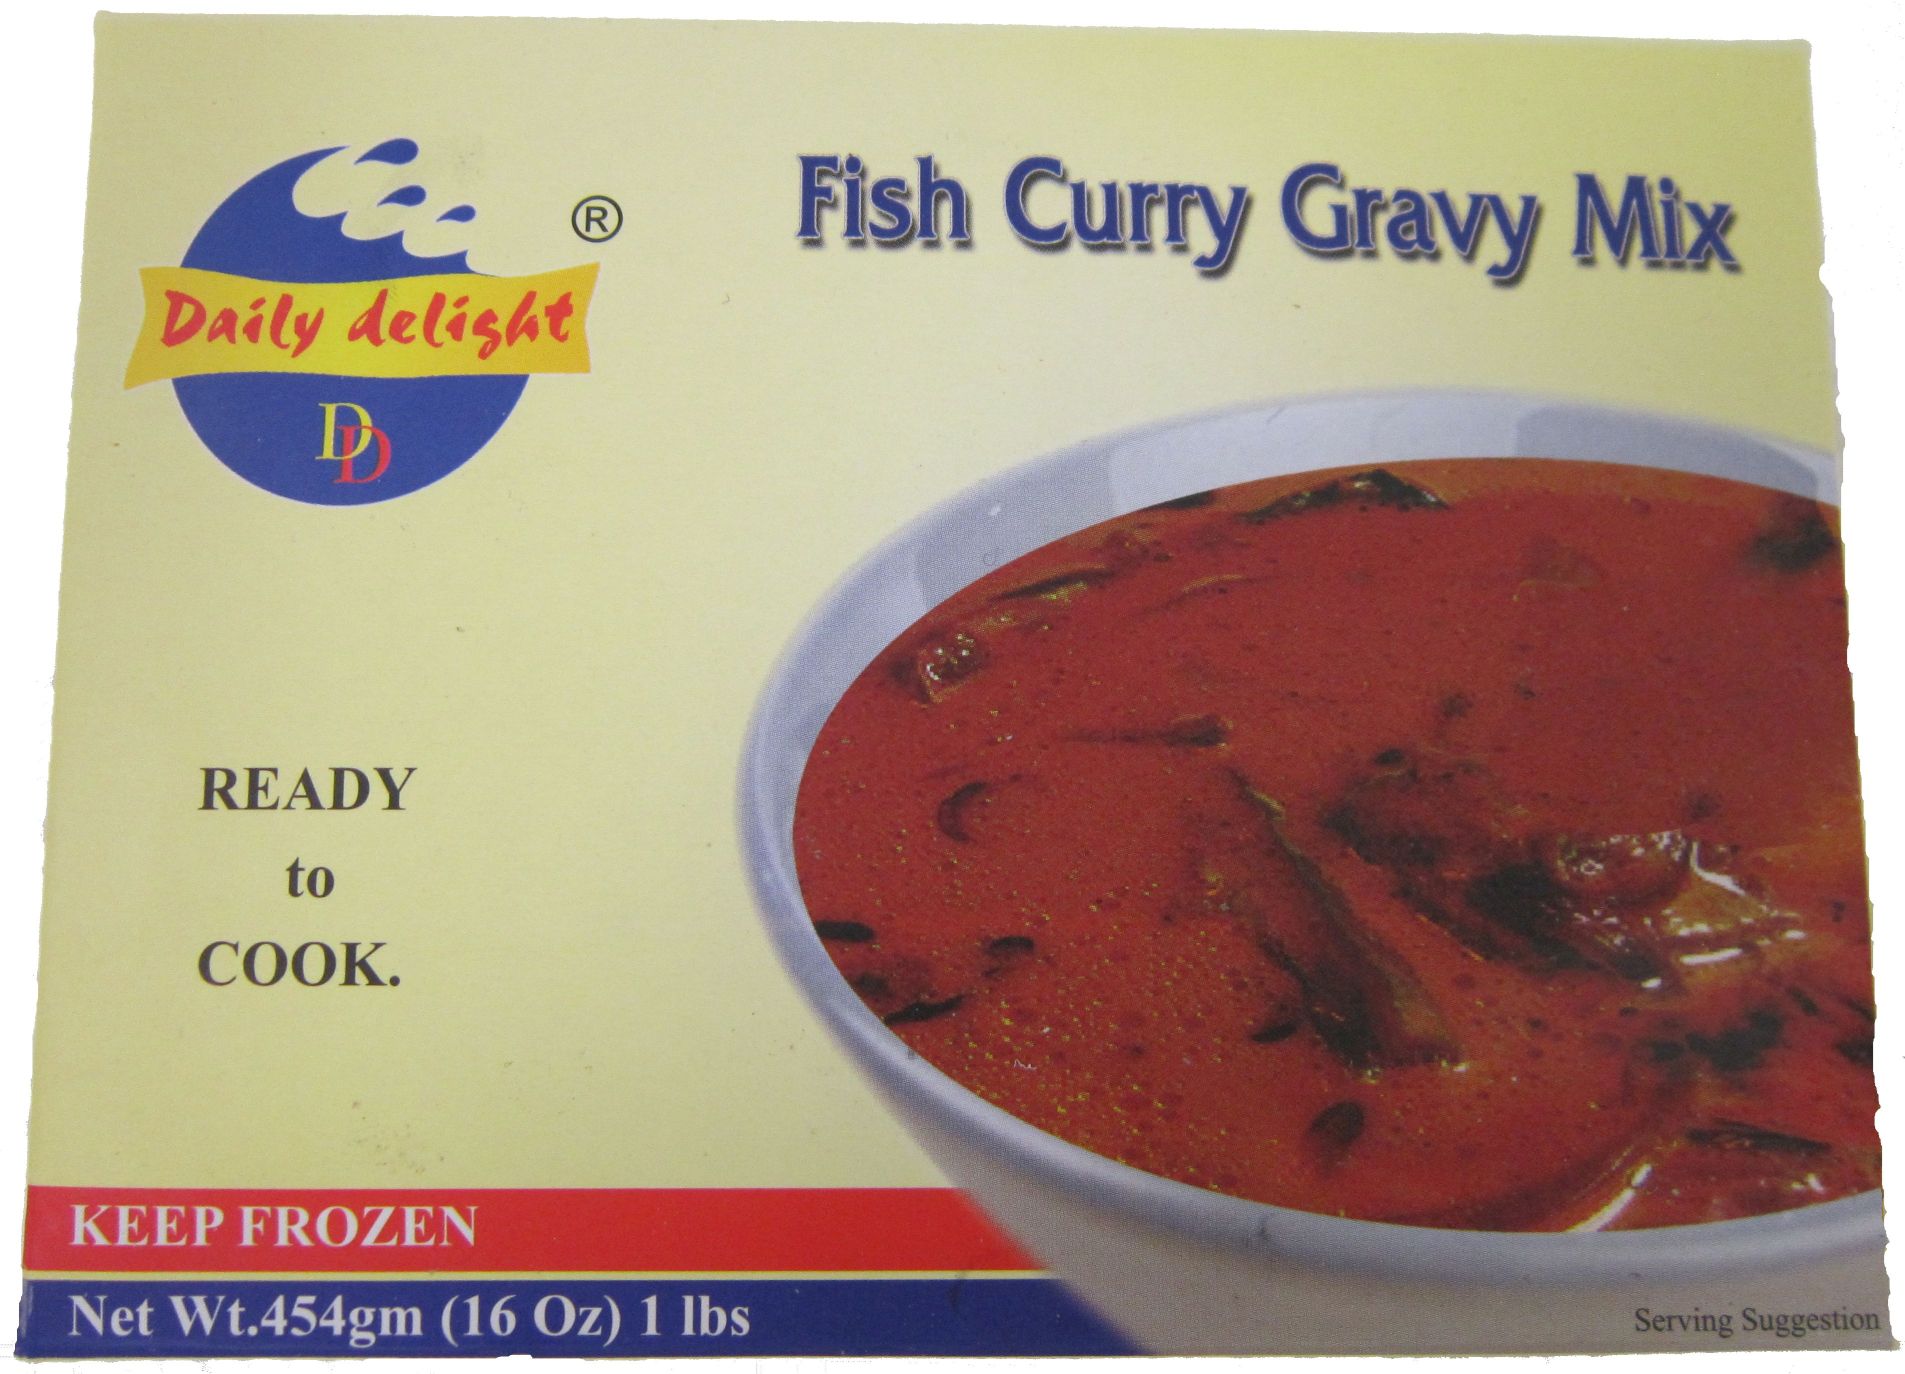 Fish Curry Gravy Mix Image